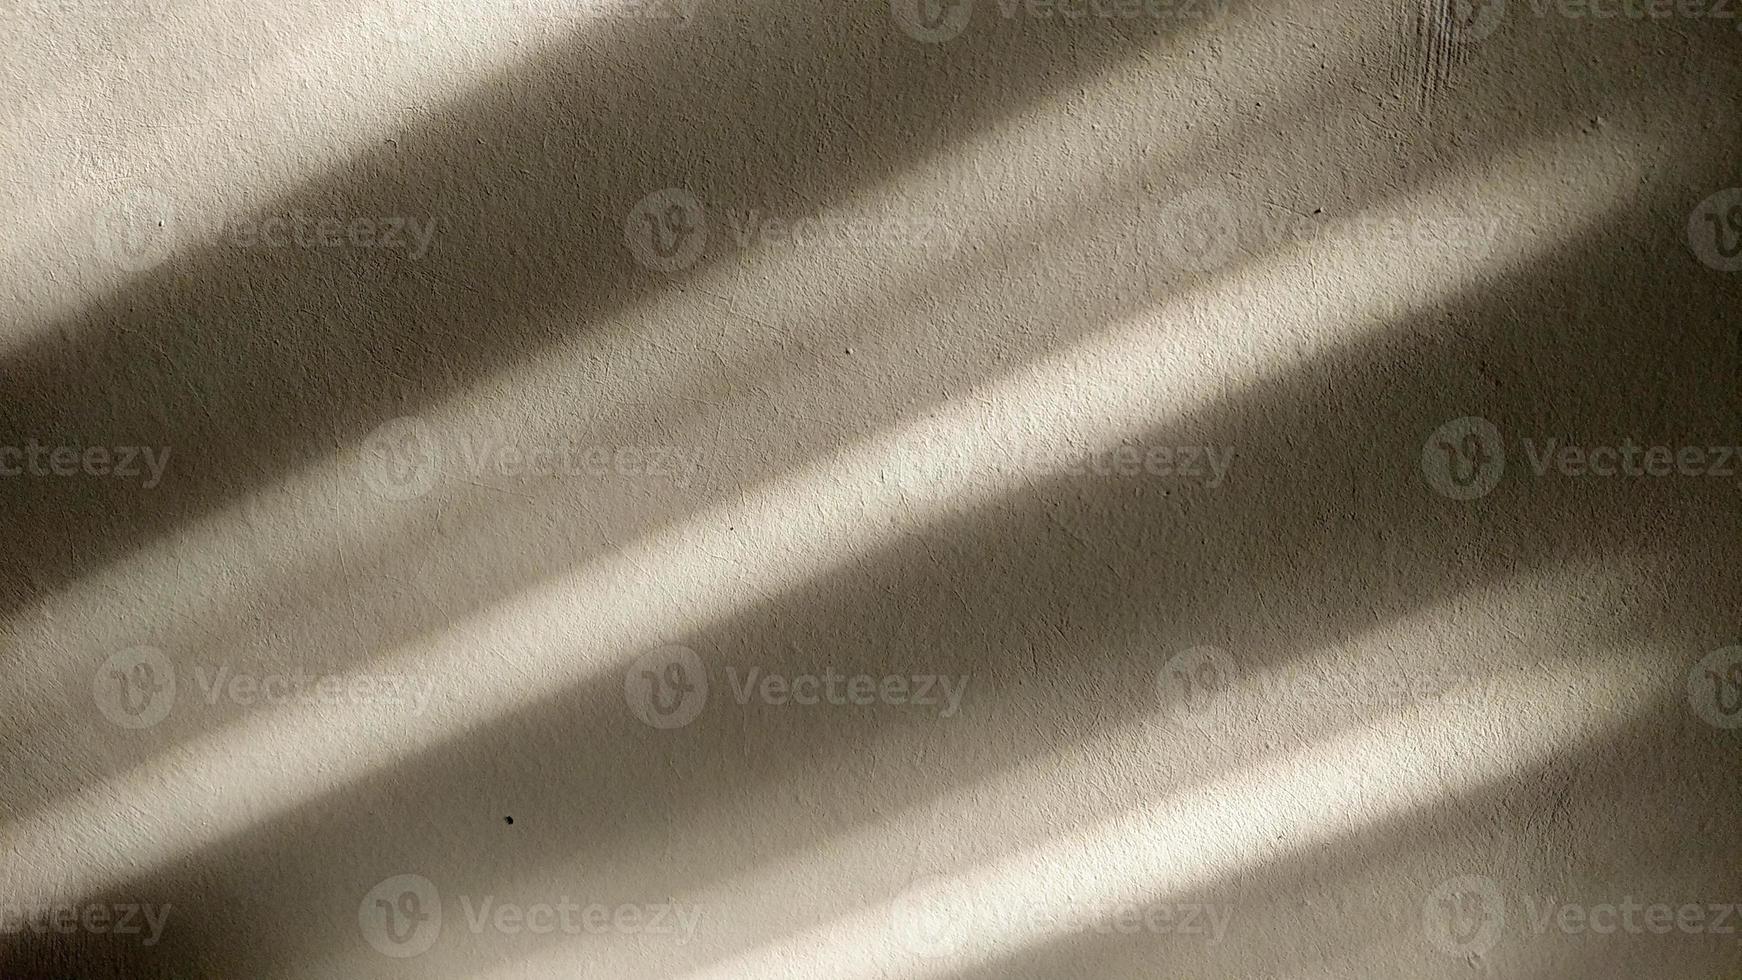 sombra de cortinas de bambu na parede à tarde. conceito de luz e sombra. foto